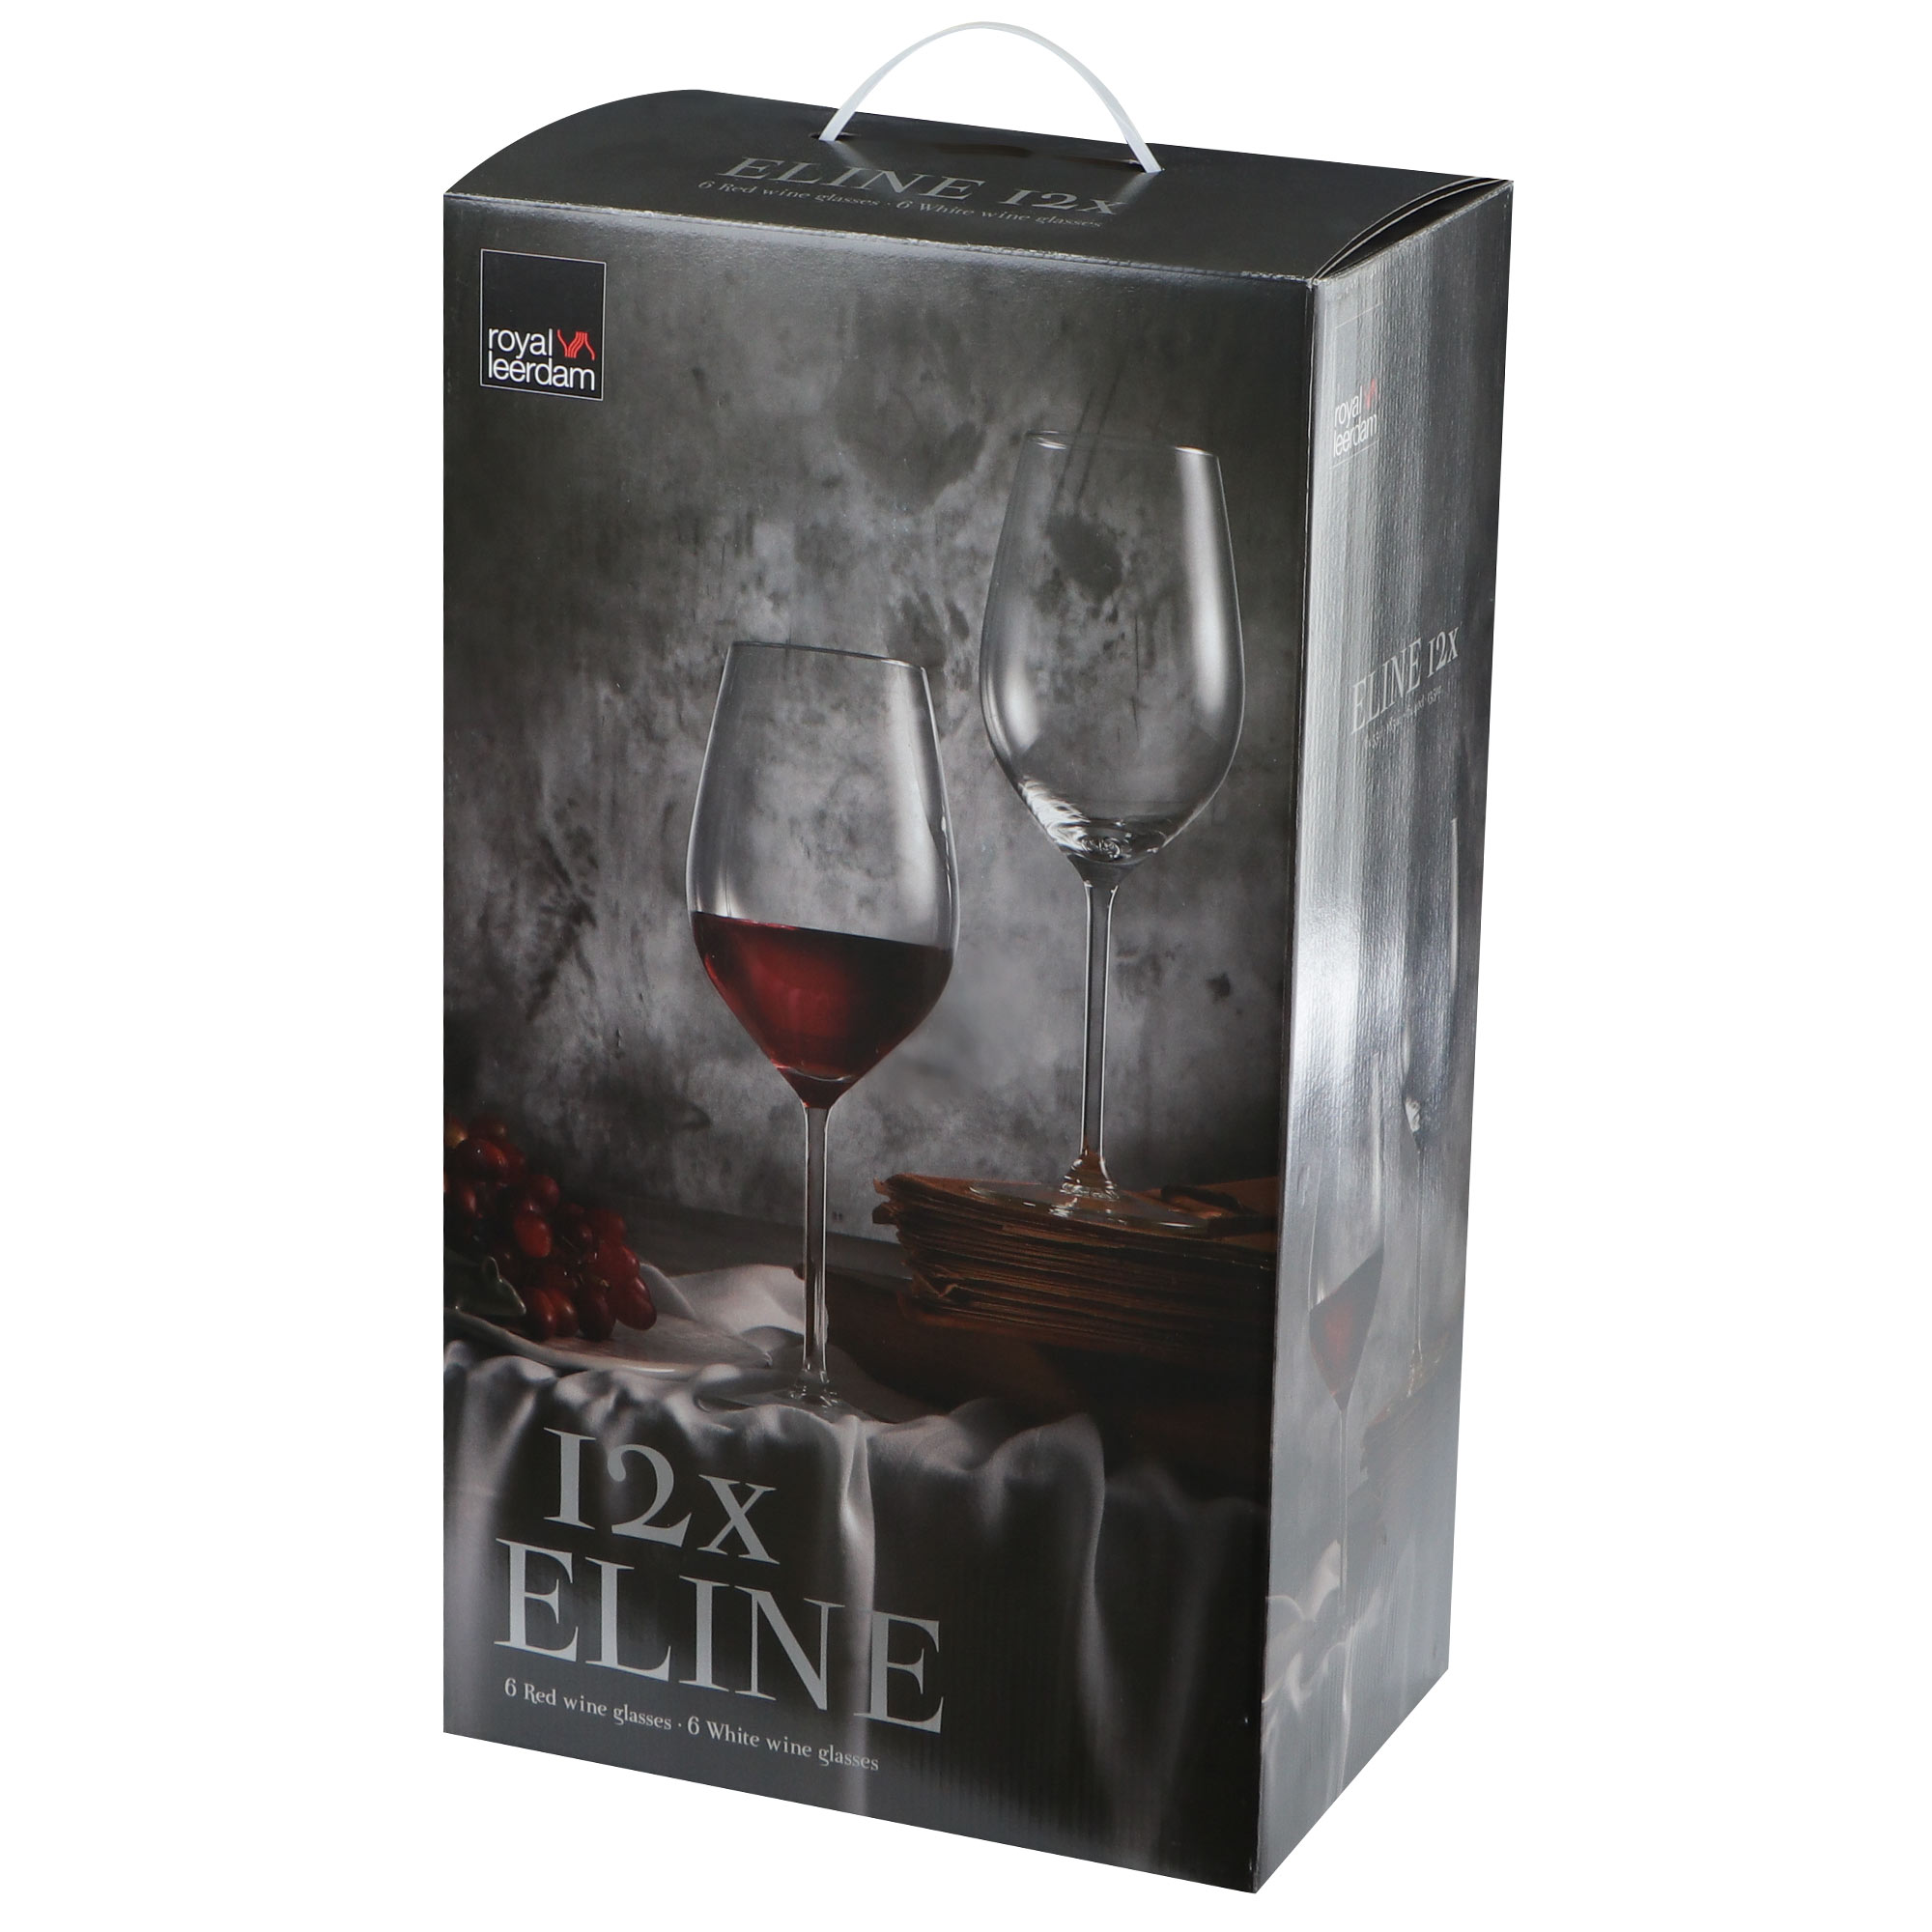 Набор бокалов для вина Royal Leerdam Eline 12 шт, цвет прозрачный - фото 6